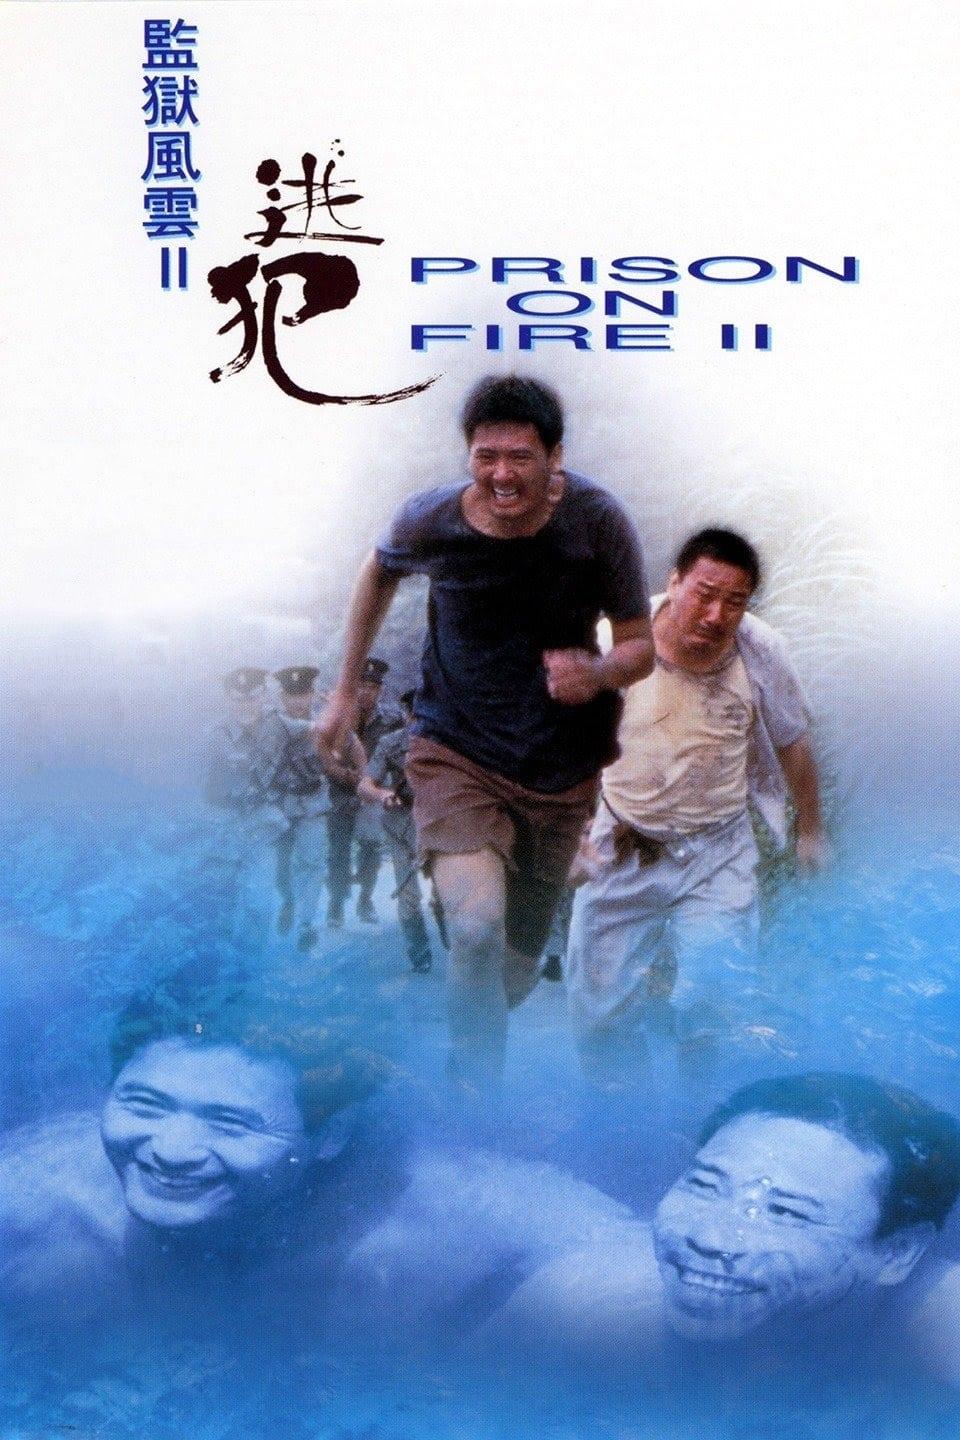 Prison on Fire II poster